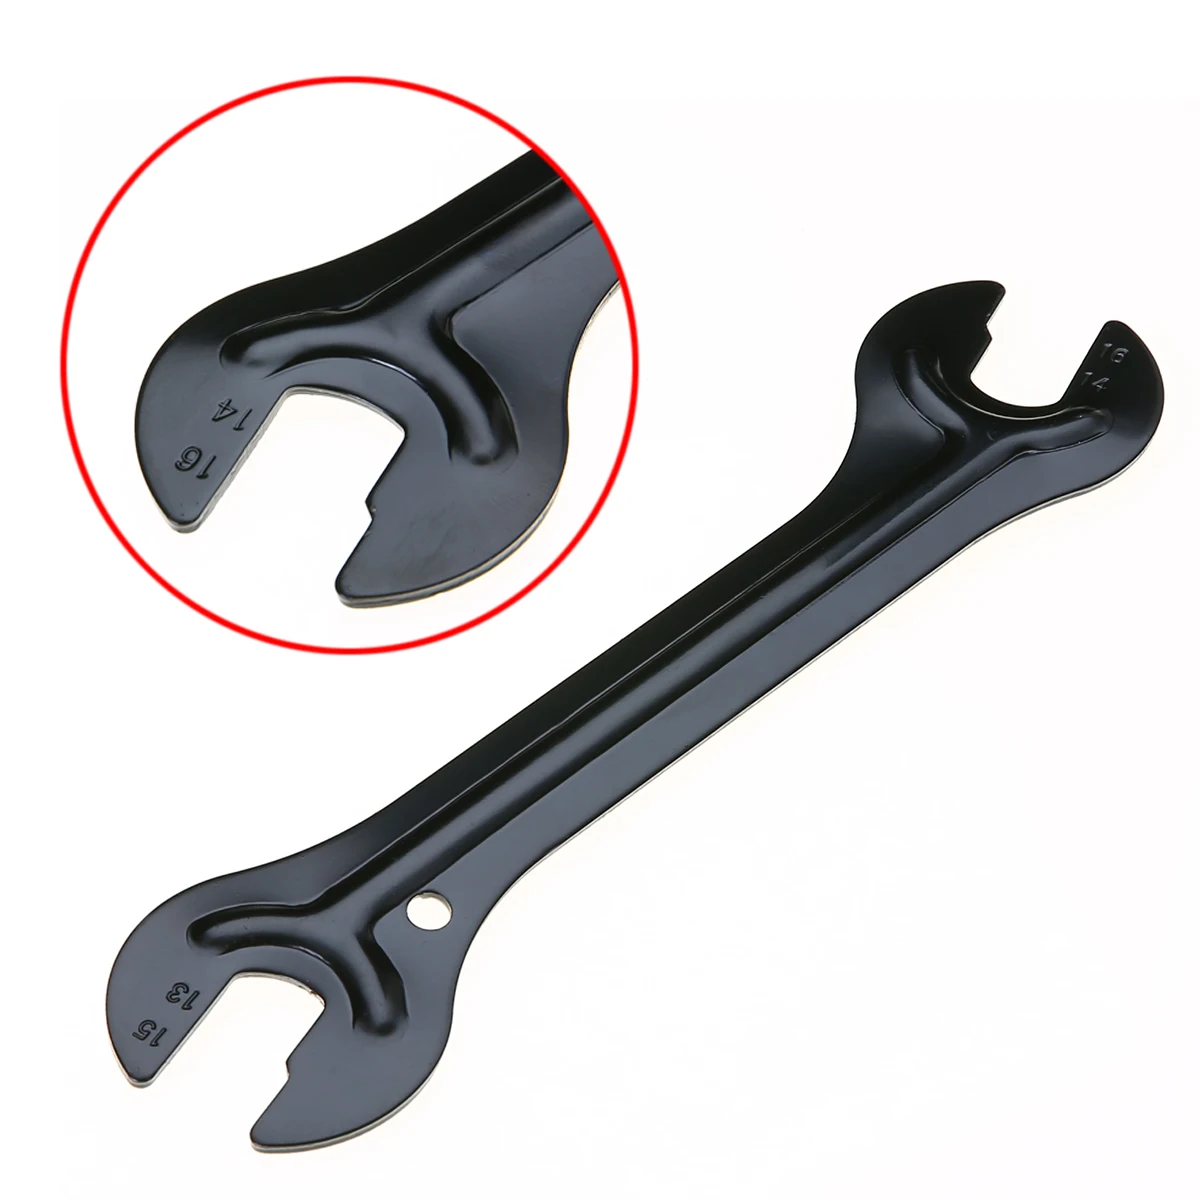 13/14/15/16mm BMX Steel Bicycle Bike Axle Hub Cone Wrench Spanner Repair Tool 